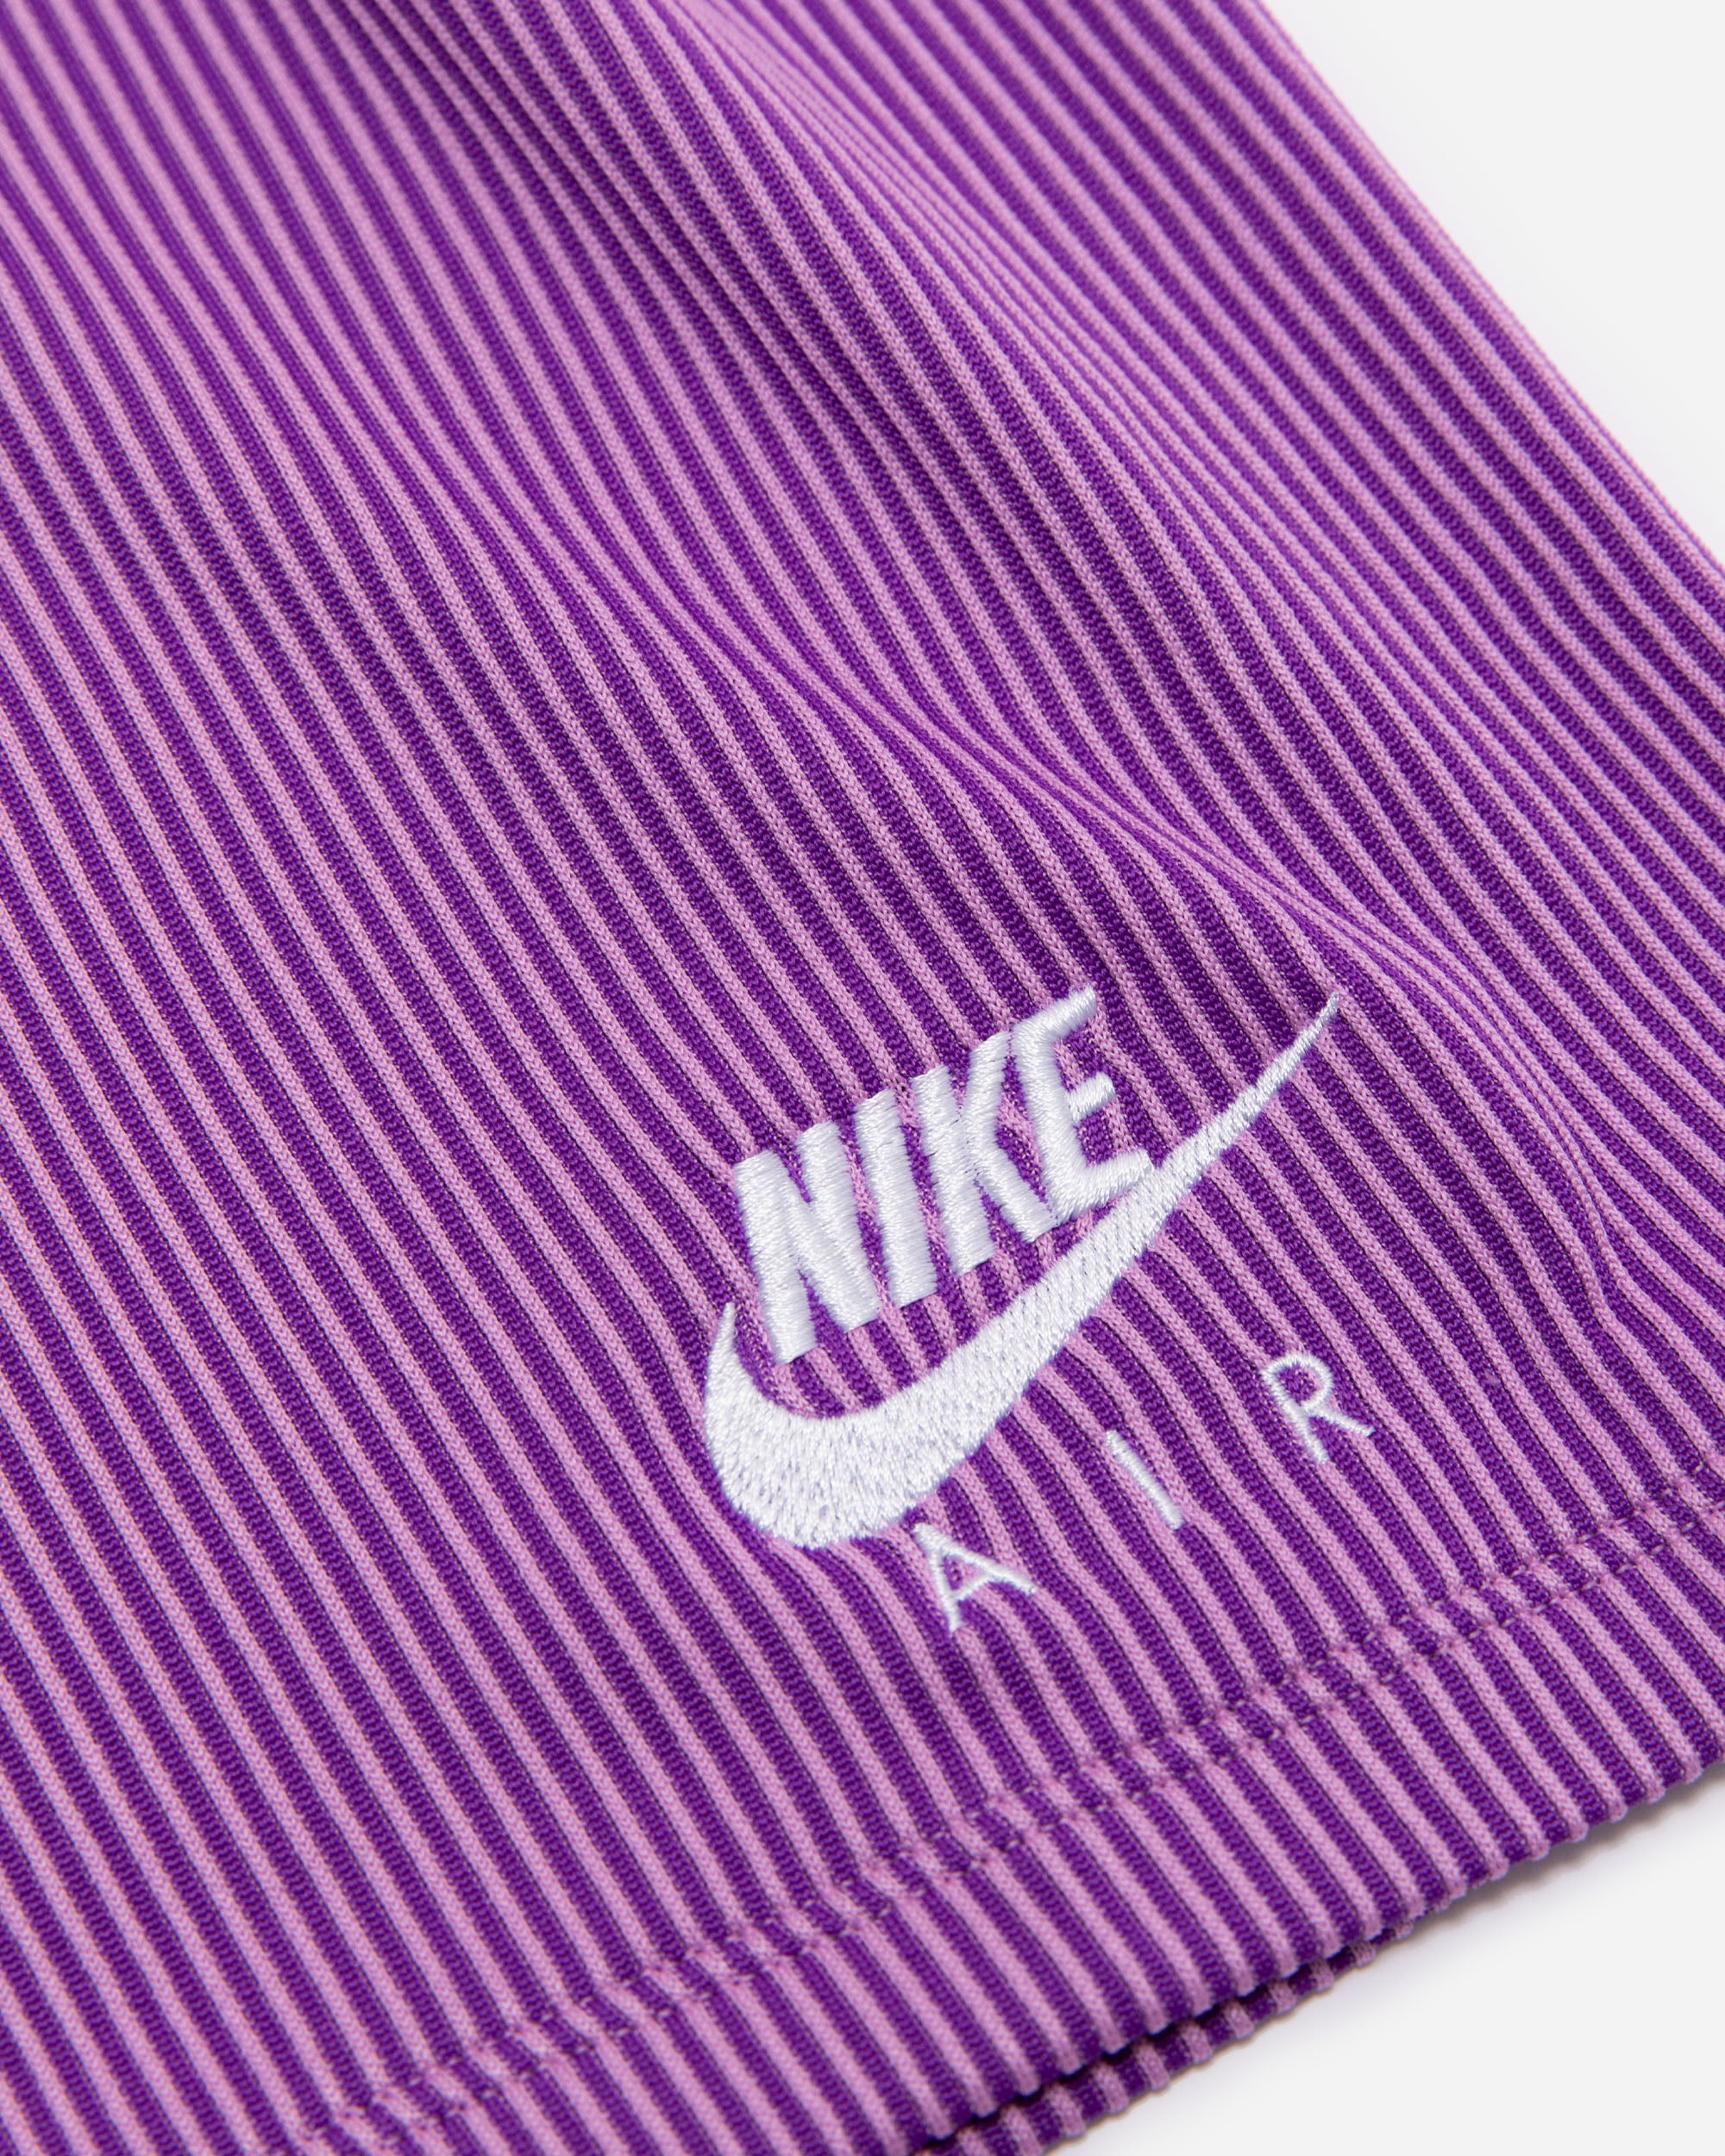 Nike Rib Skirt Violet Shock/White CZ9343-591